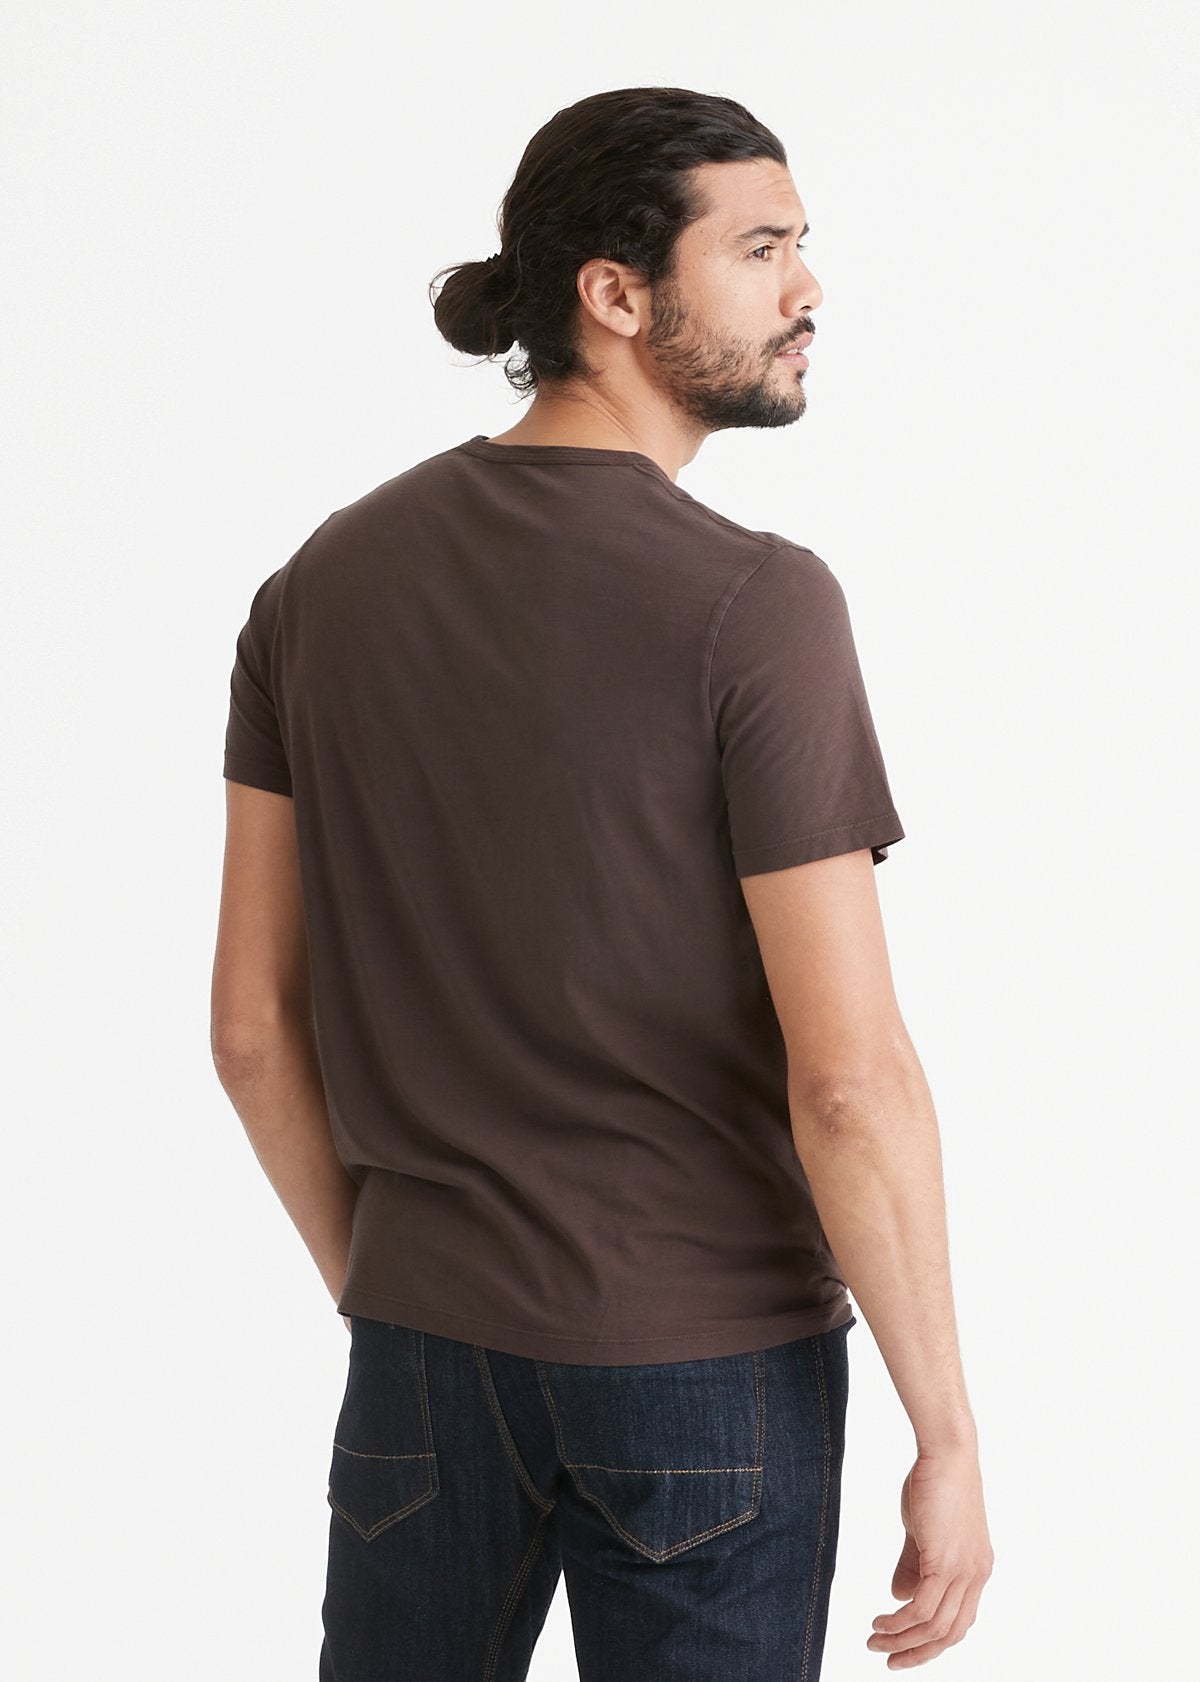 mens taupe soft lightweight t-shirt back